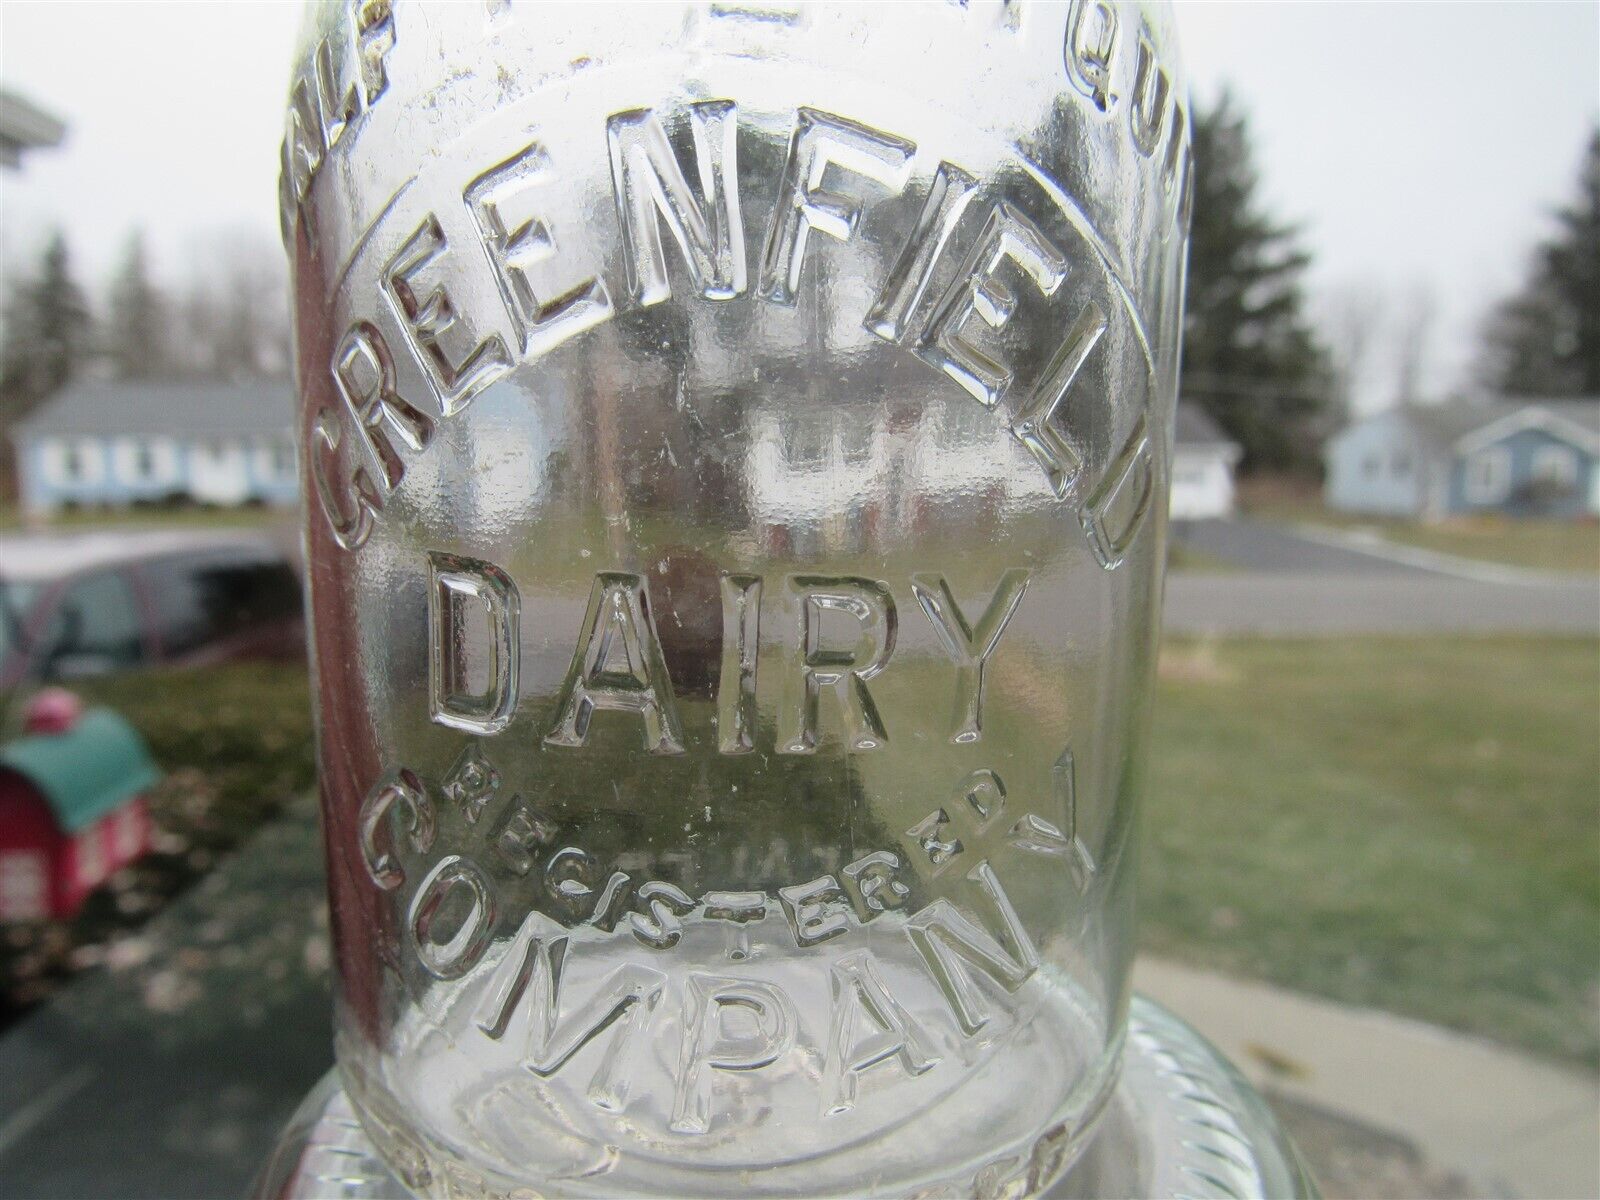 TREHP Milk Bottle Greenfield Dairy Co Greenfield MA FRANKLIN COUNTY 